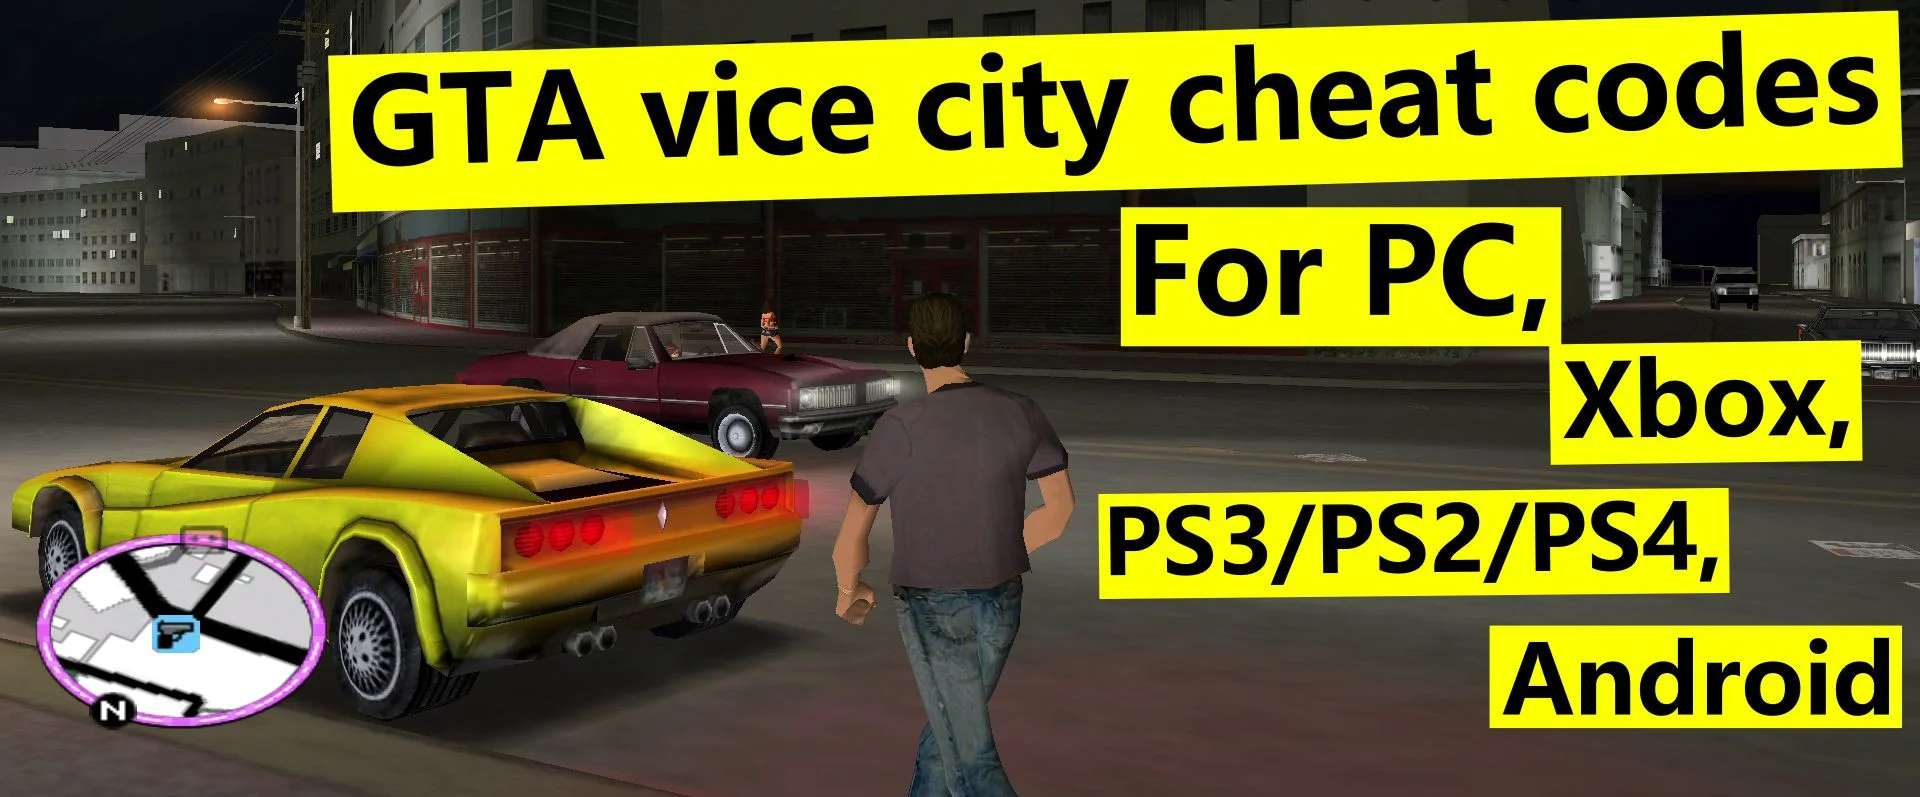 Chey ps - E código de GTA vice city